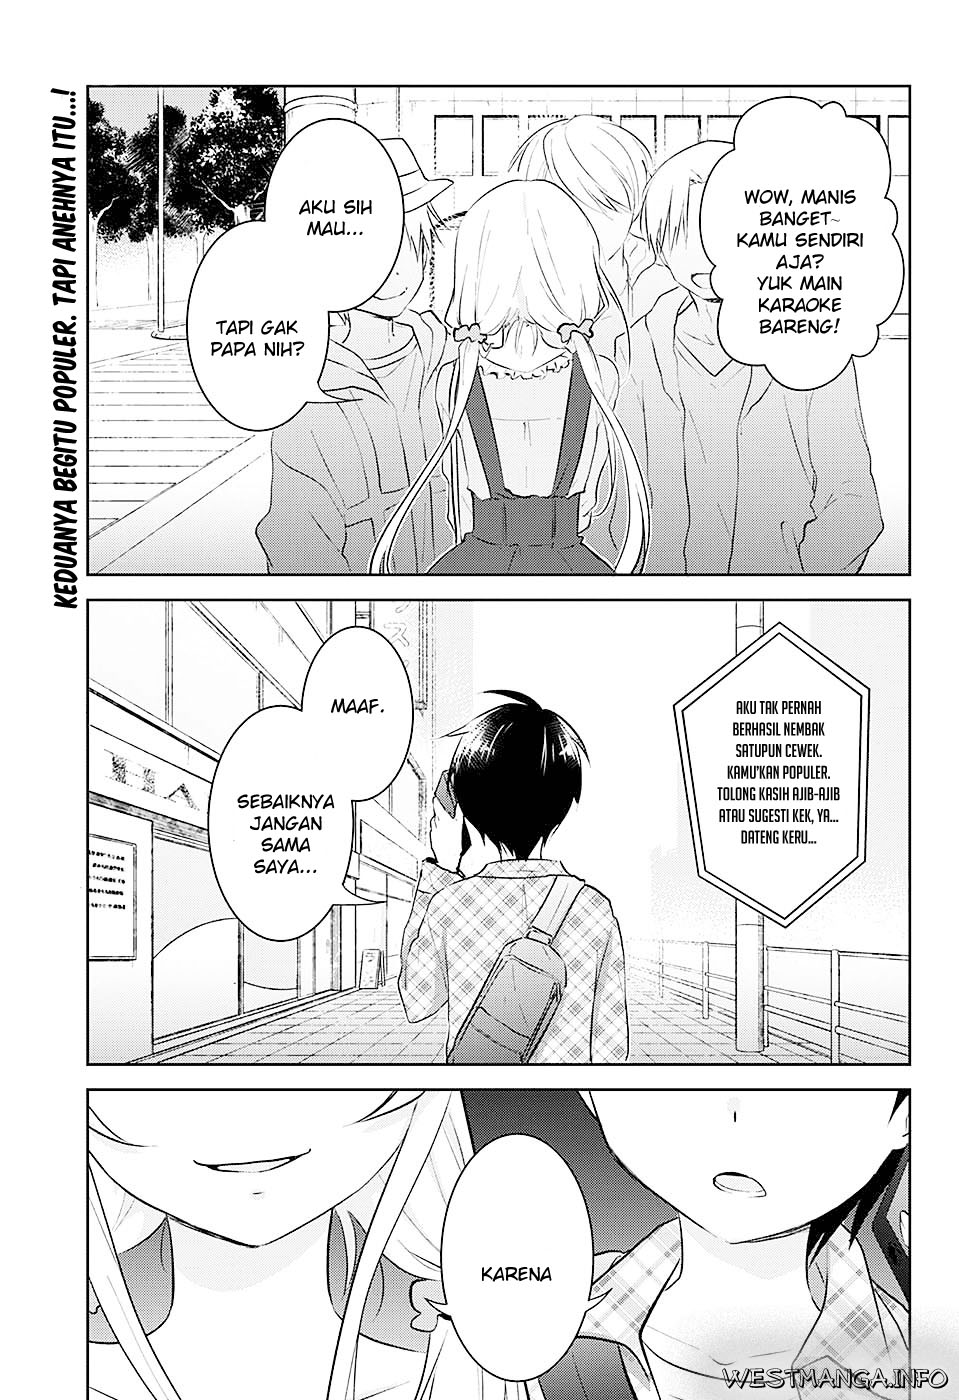 Baca Manga YugaMira Chapter 1-End Gambar 2